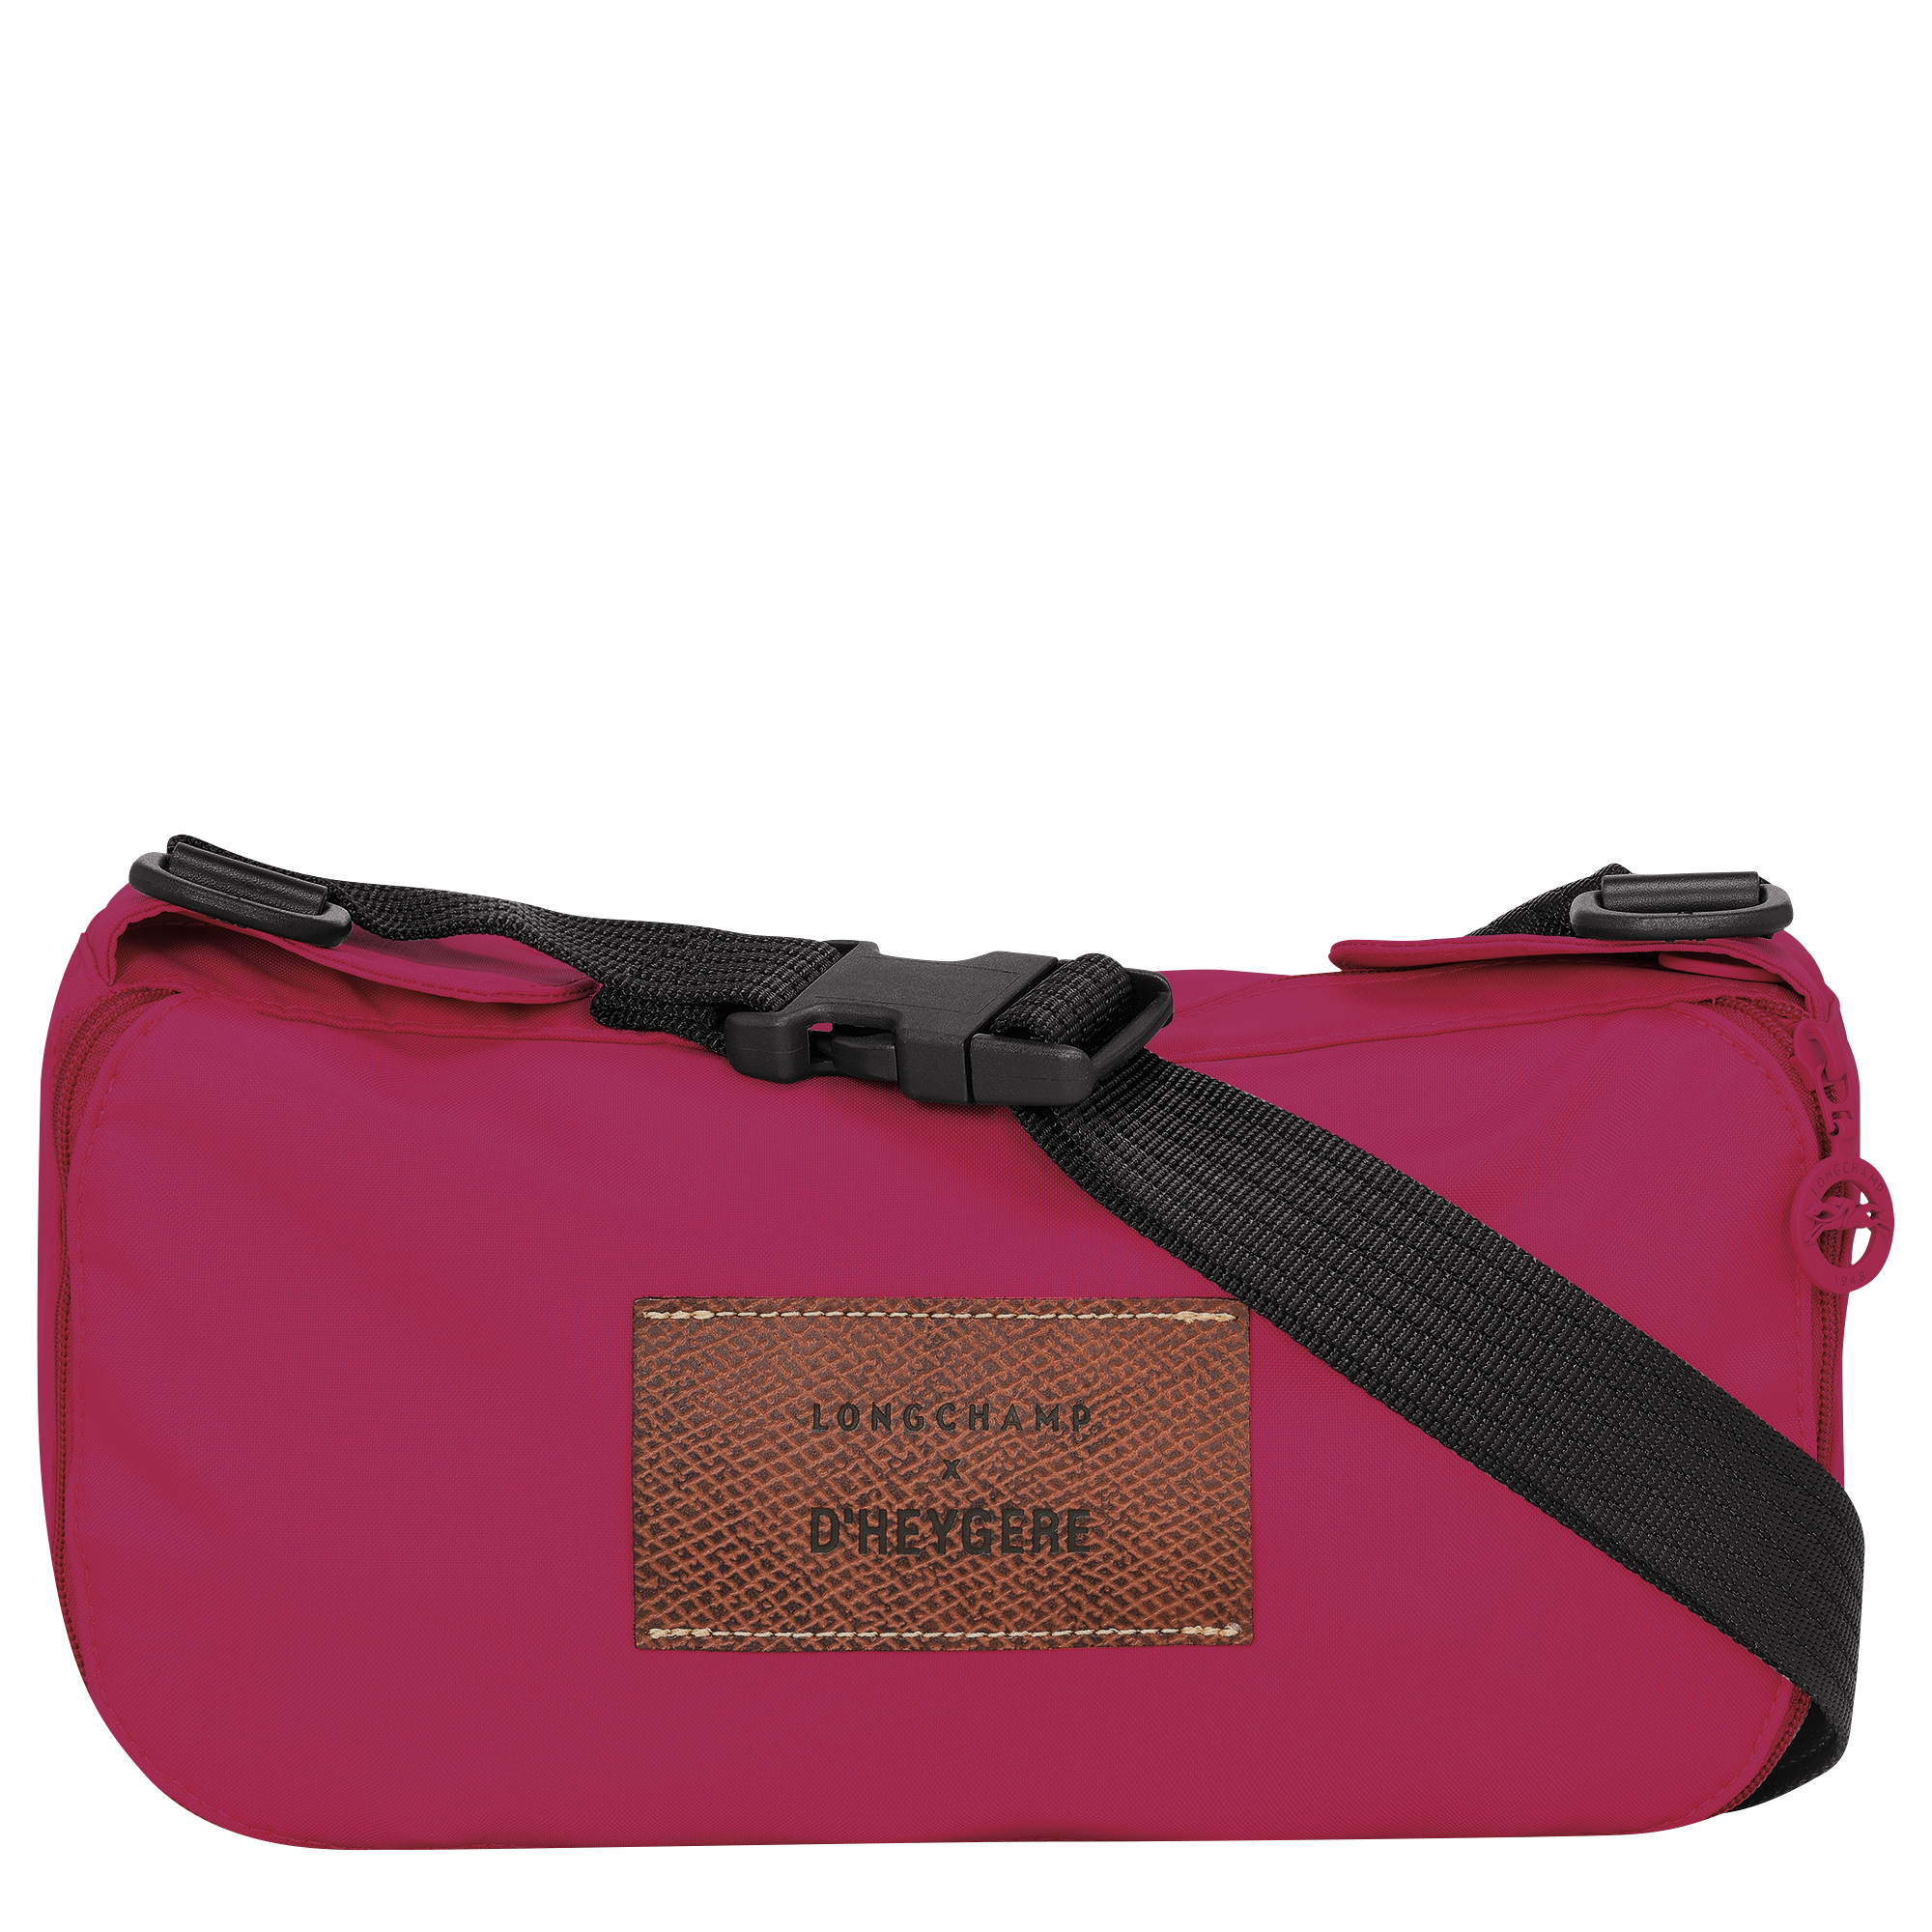 Longchamp X D_heygere pink crossbody bag-backpack Php 25,500.png